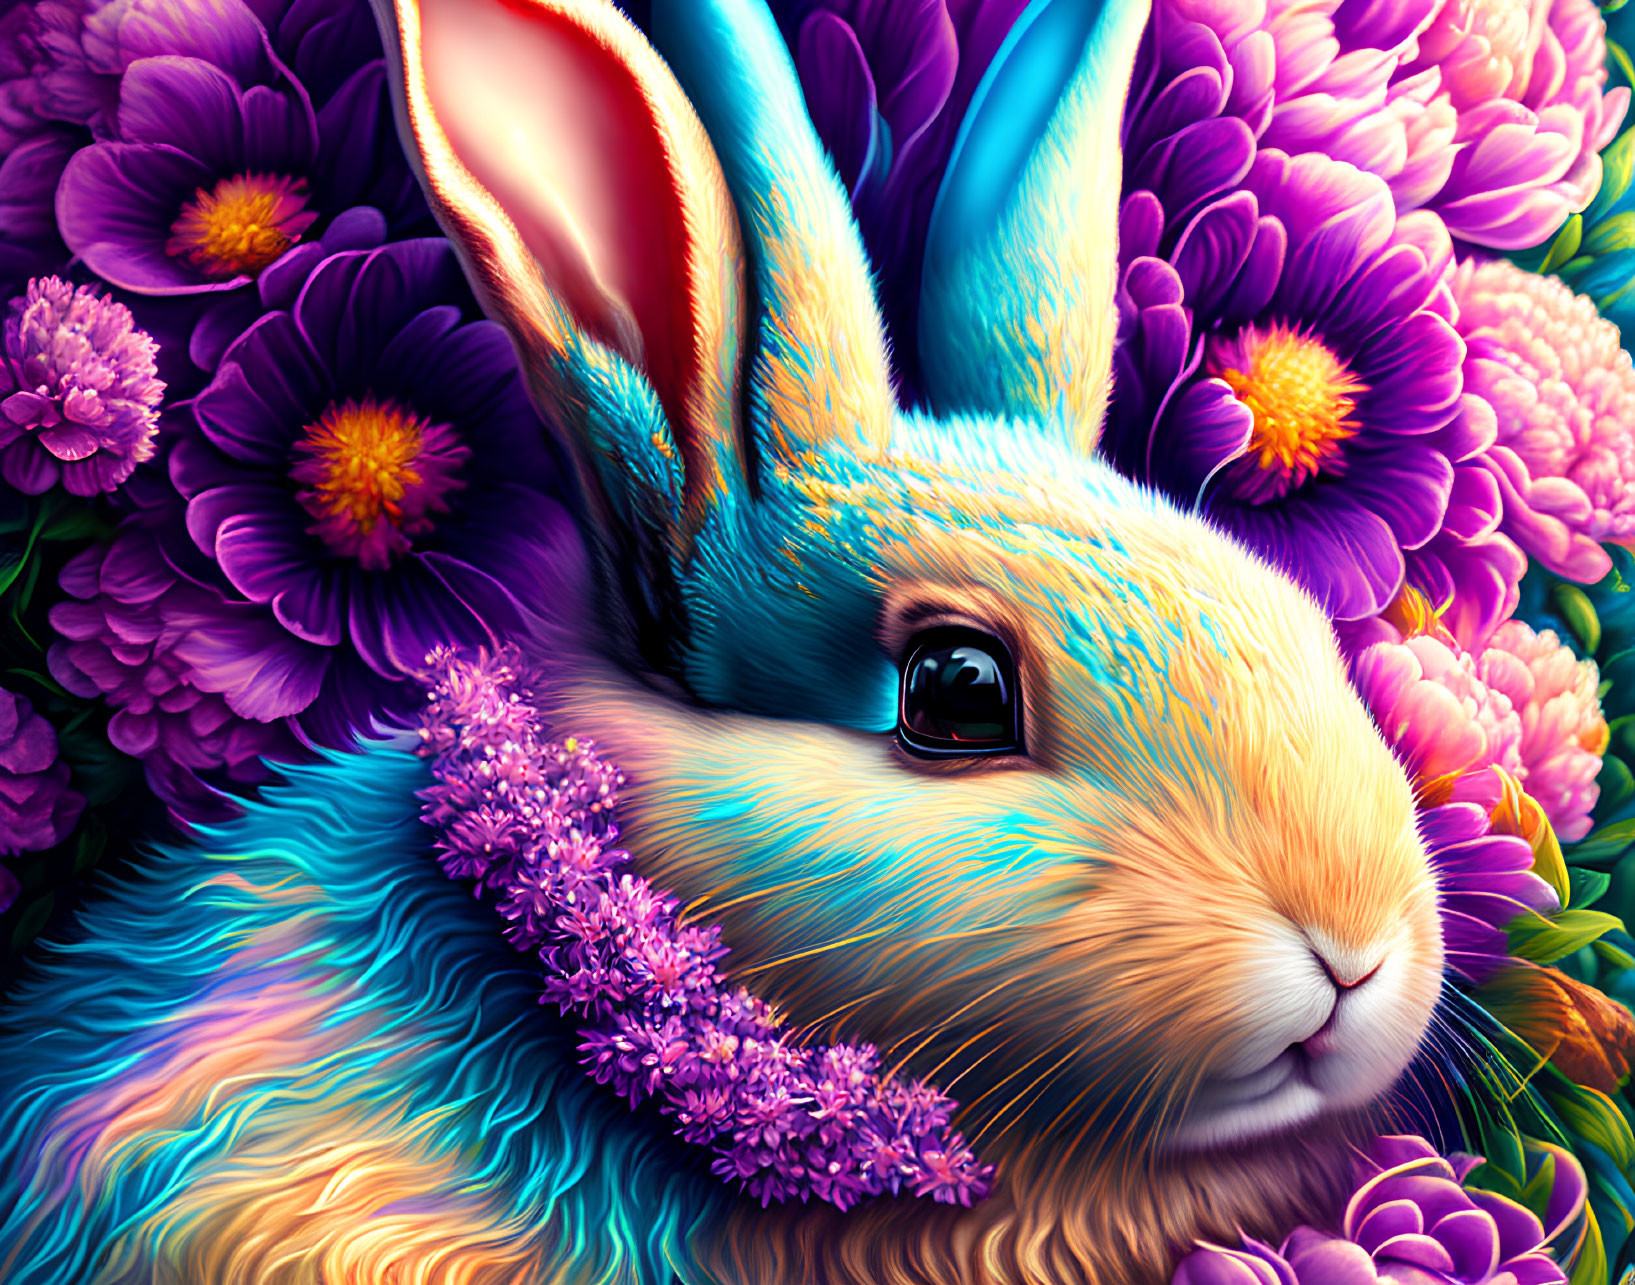 Vibrant Rabbit Illustration Surrounded by Purple Flowers